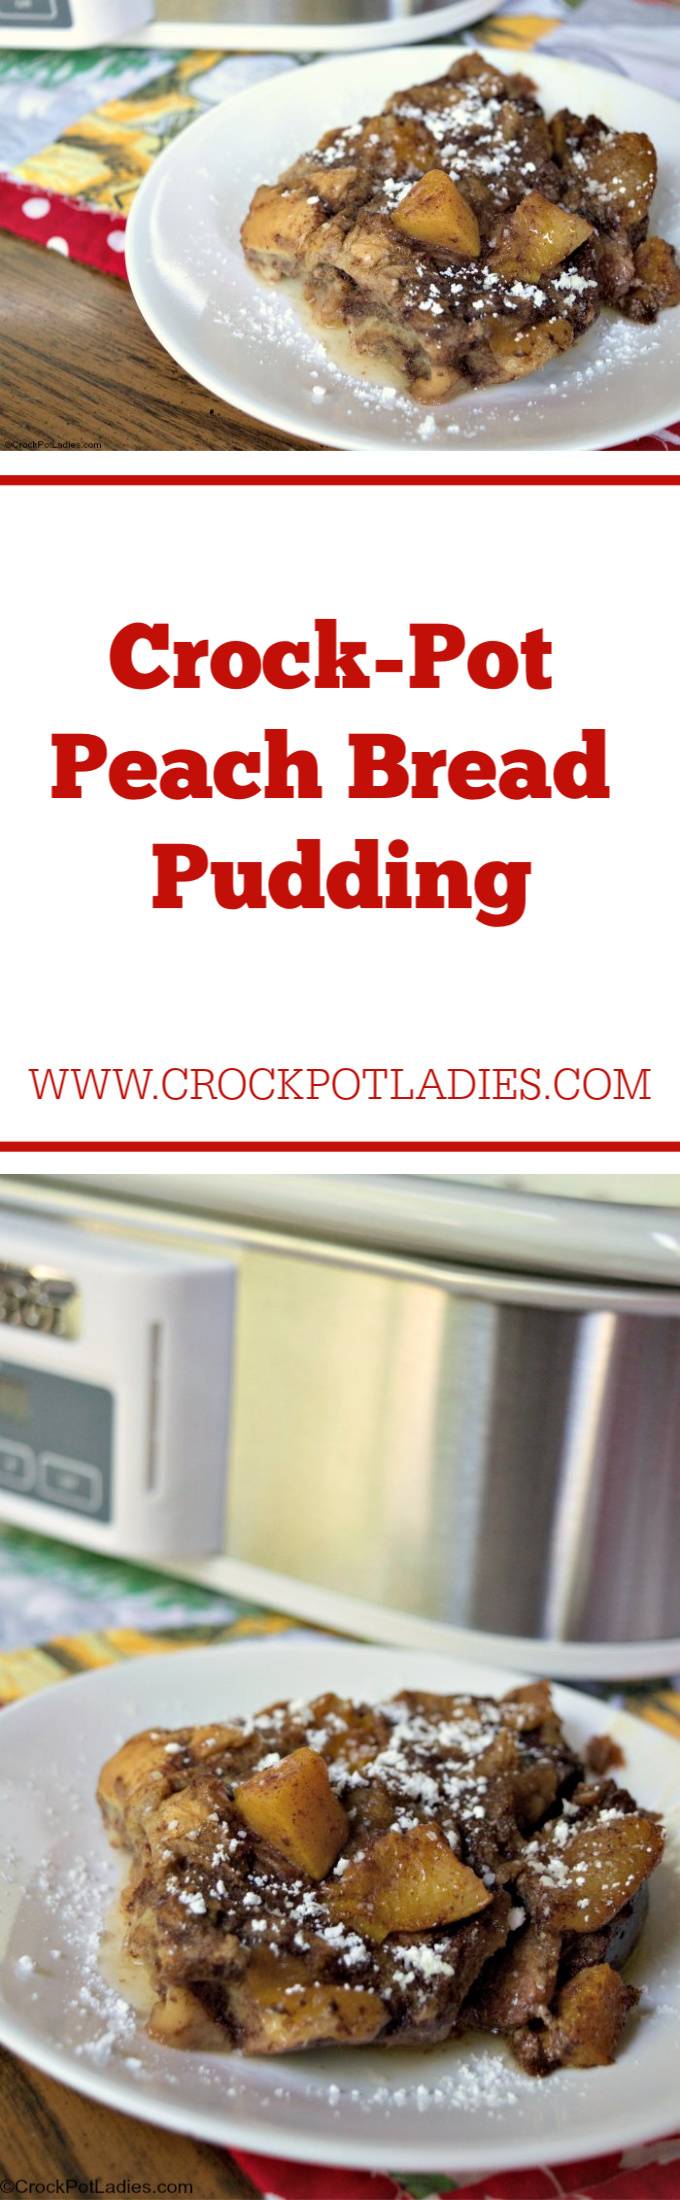 Crock-Pot Peach Bread Pudding